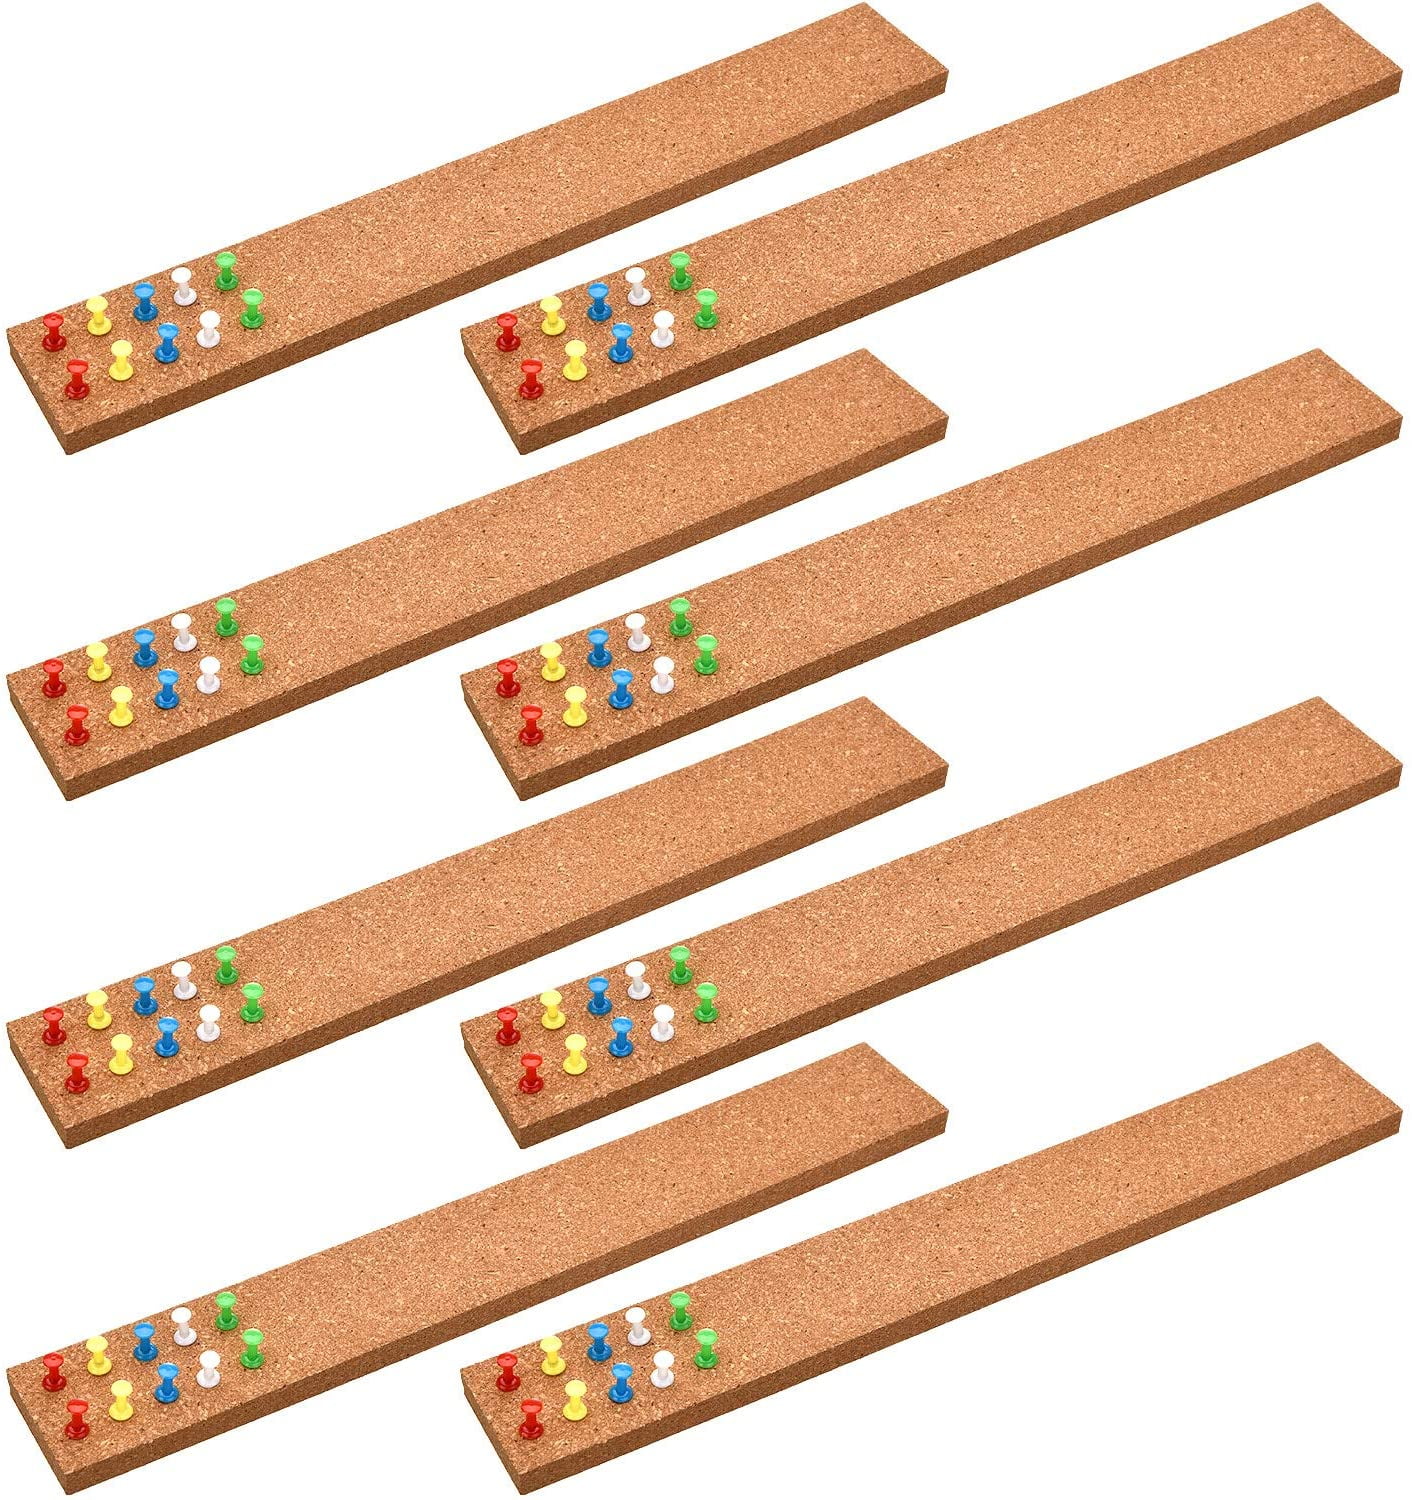 8 Pieces Cork Bulletin Bar Strip 15 x 2 Inch Cork Board Bar Strip with 40 Pieces Push Pins for Office Home School Supplies